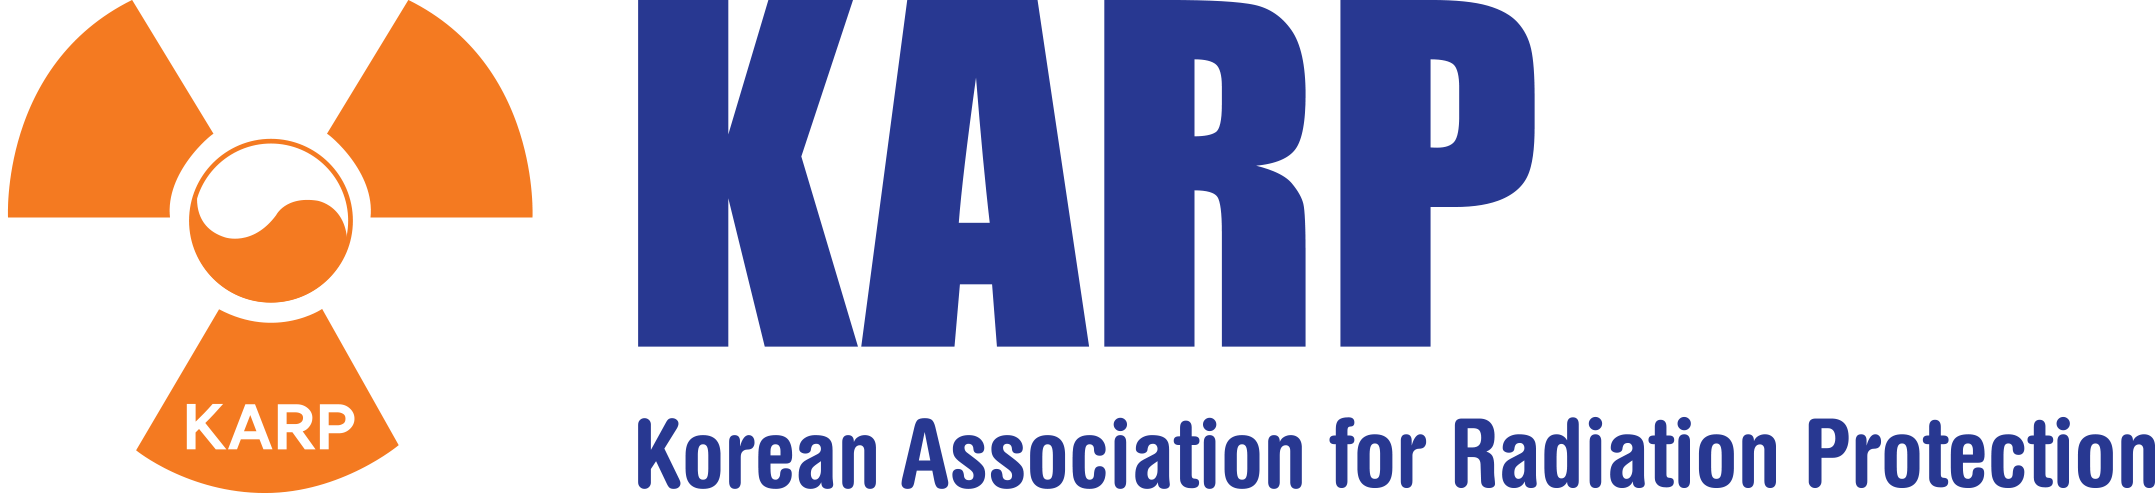 Korean Association for Radiation Protection, KARP and Korean Nuclear Society